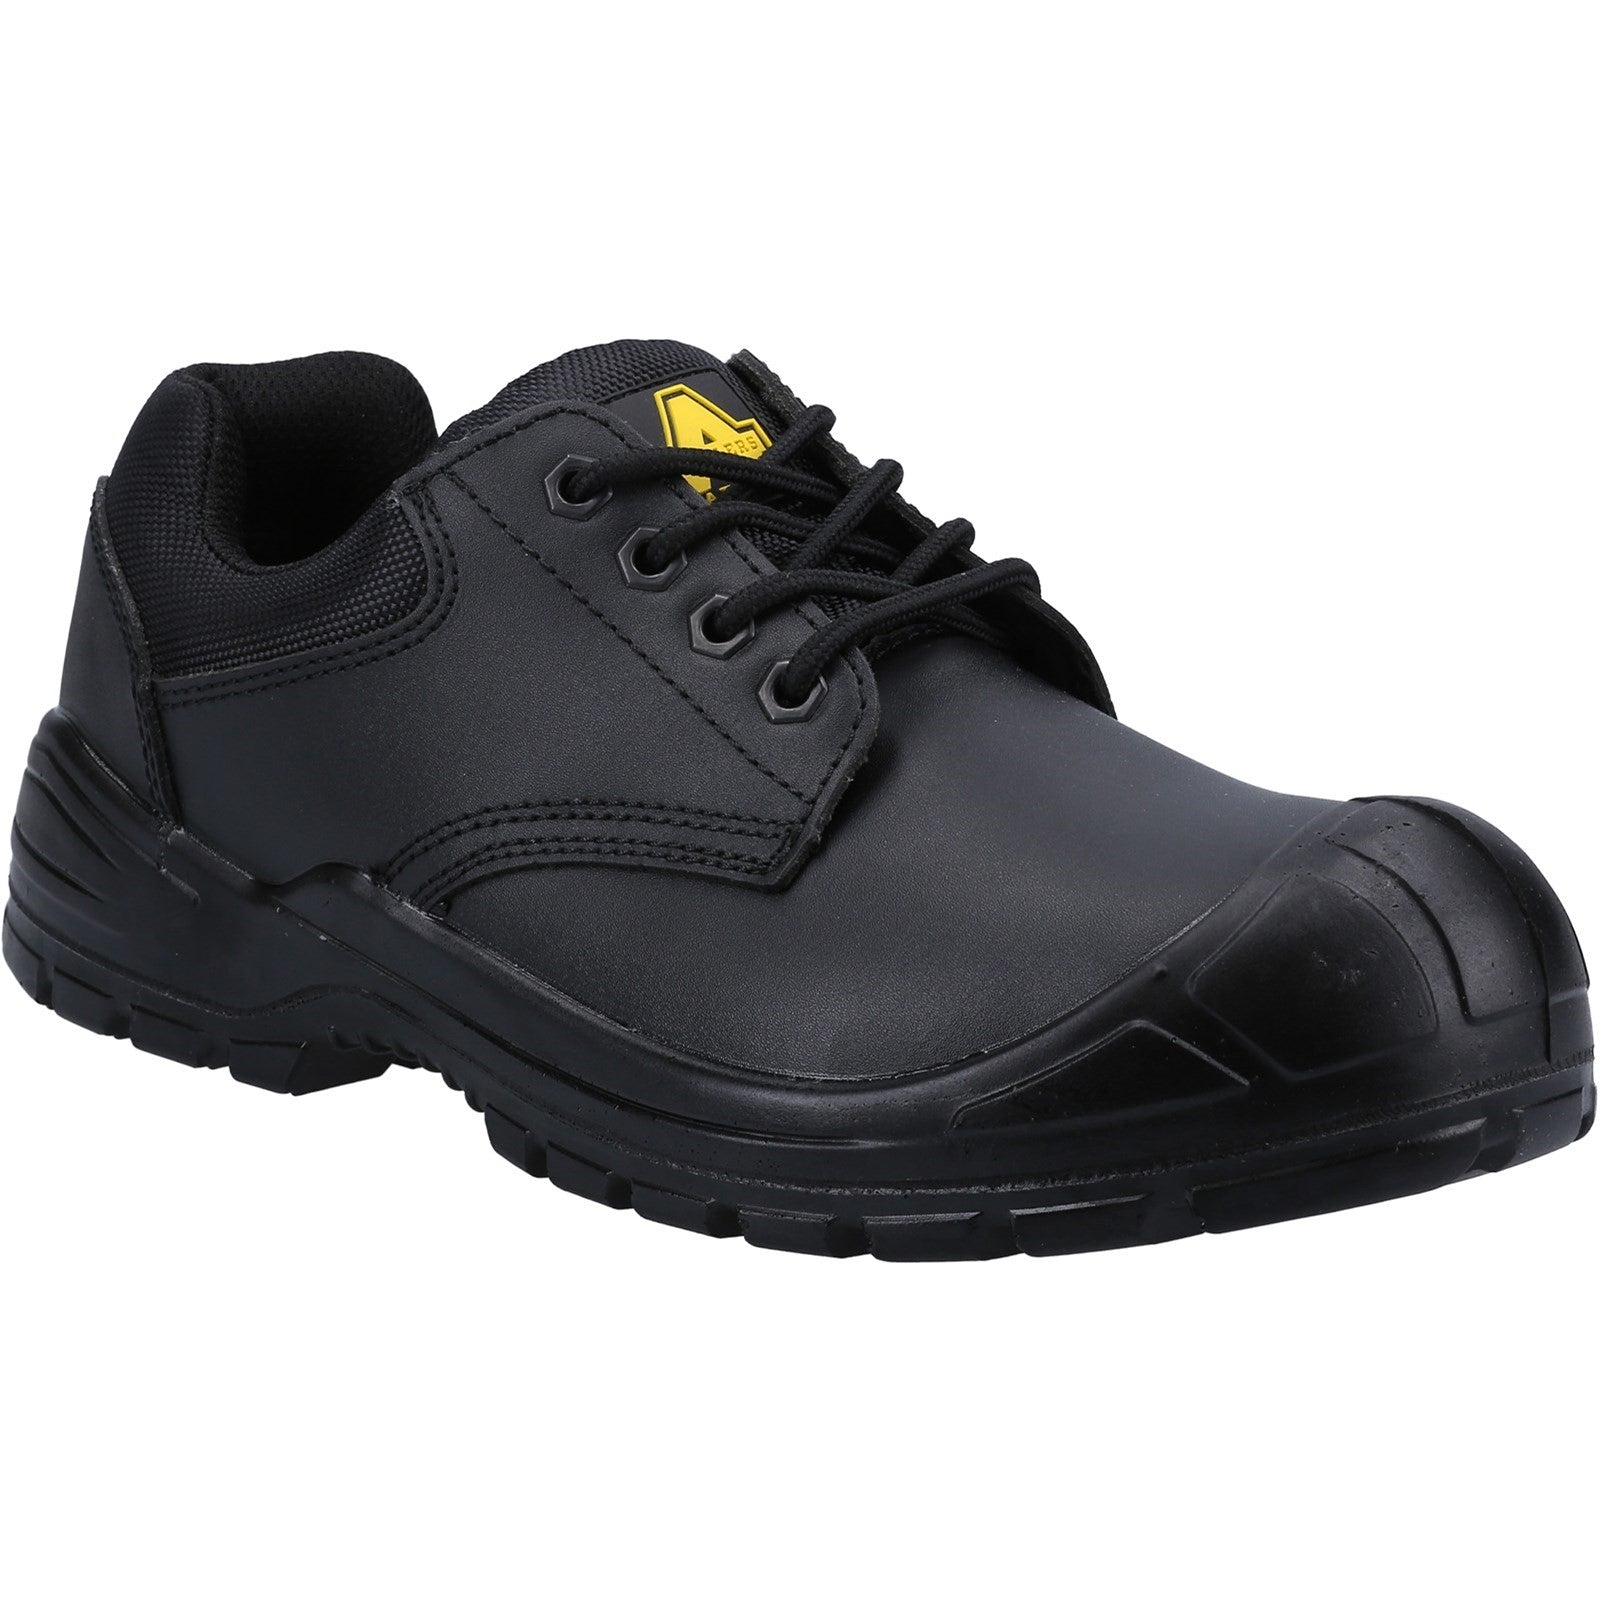 Amblers 66 Safety Shoe - Black